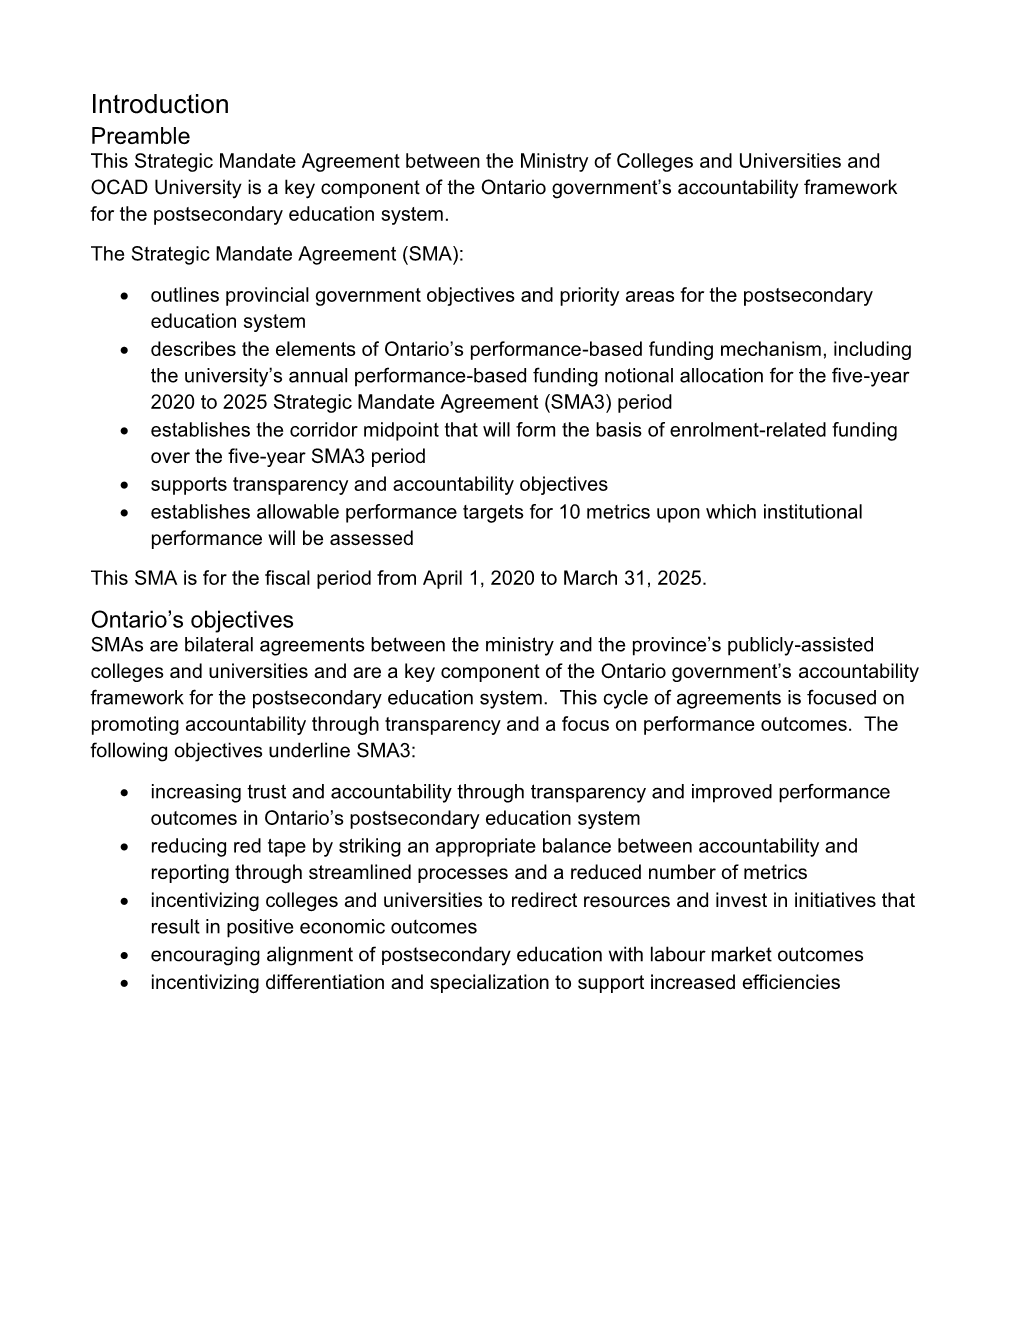 OCAD University Strategic Mandate Agreement, 2020-2025